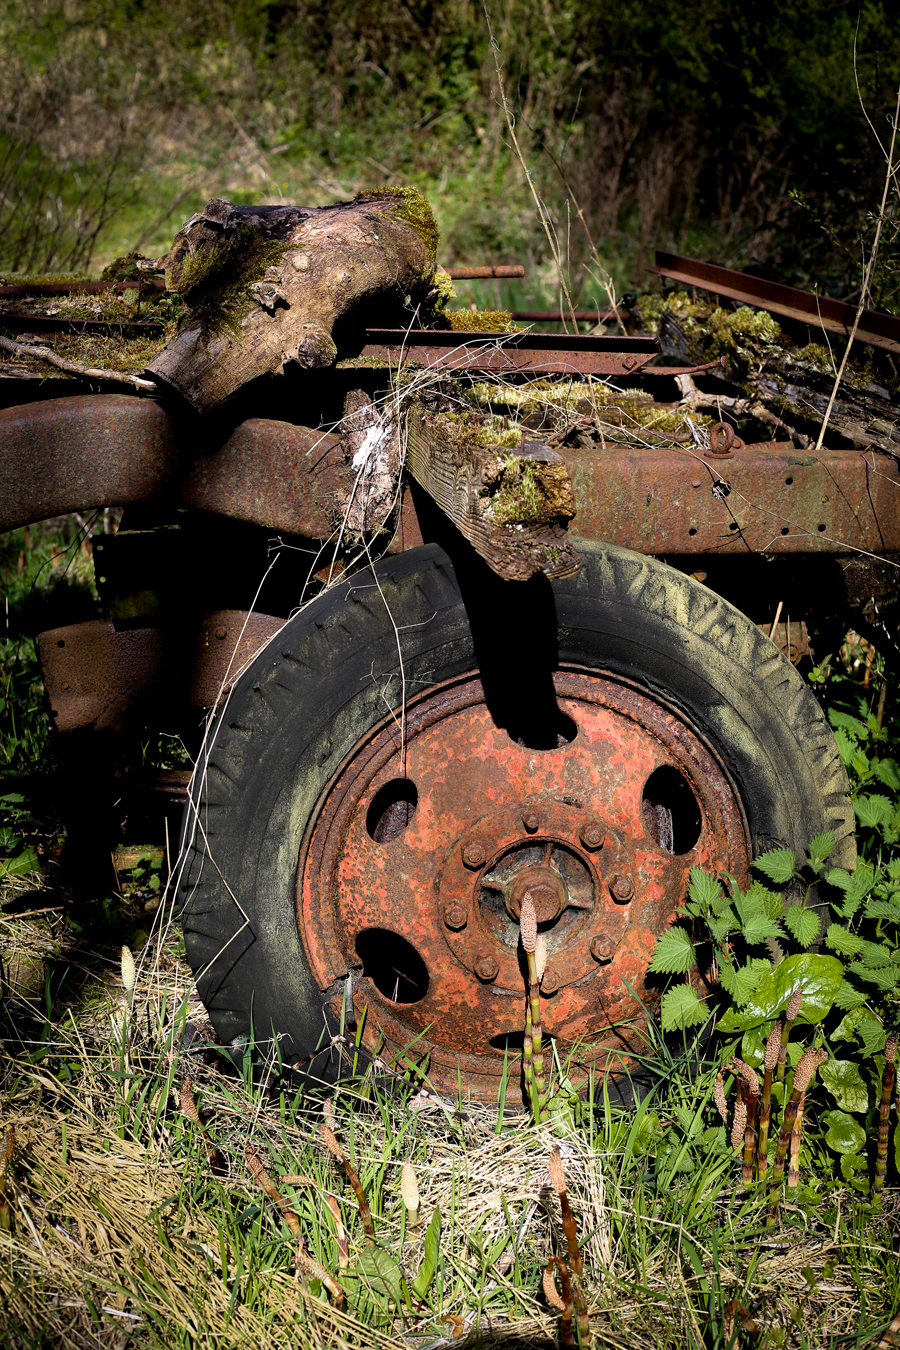 rustic trailer photograph in colour